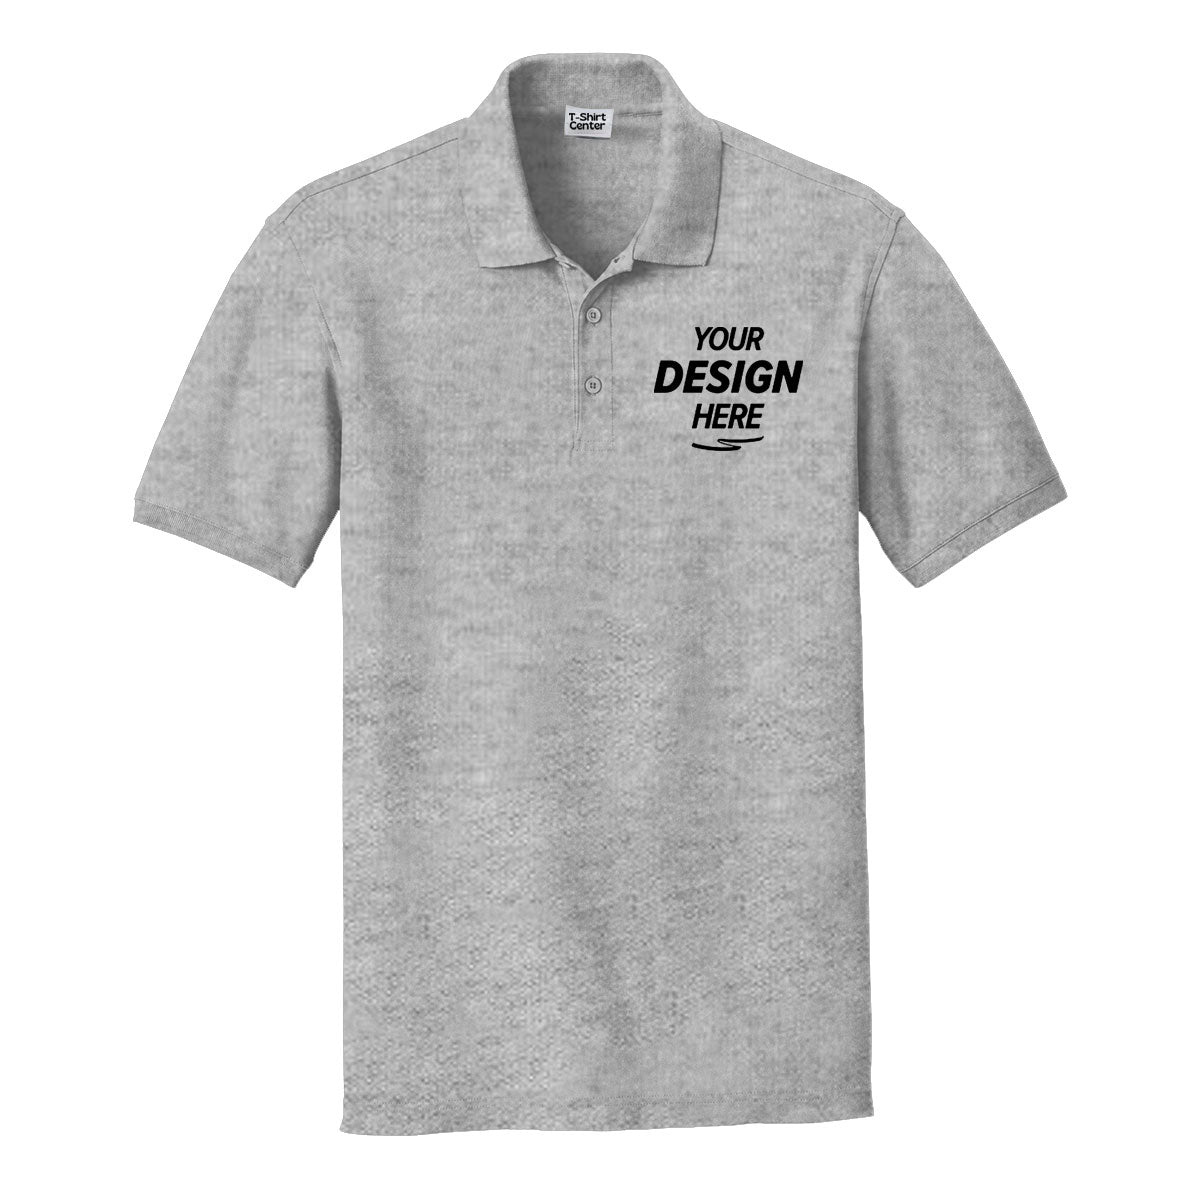 25 Cotton Polo Shirts ($399) + Free shipping